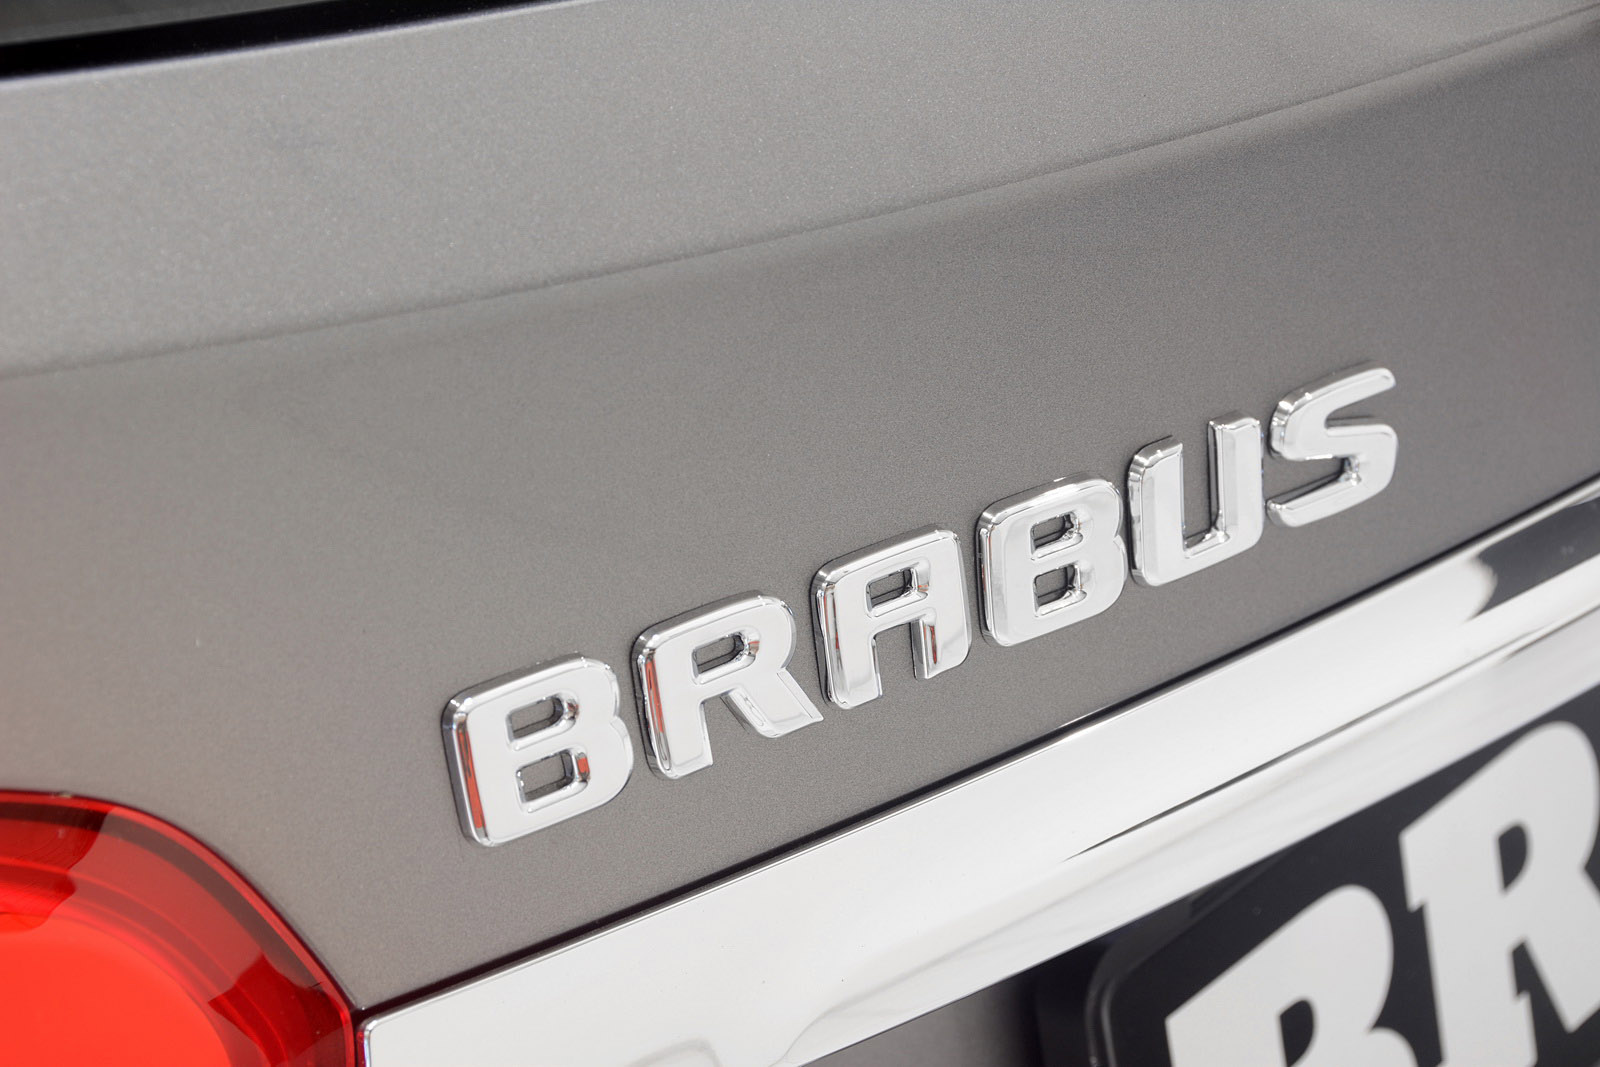 Brabus  Mercedes-Benz GLA-Class